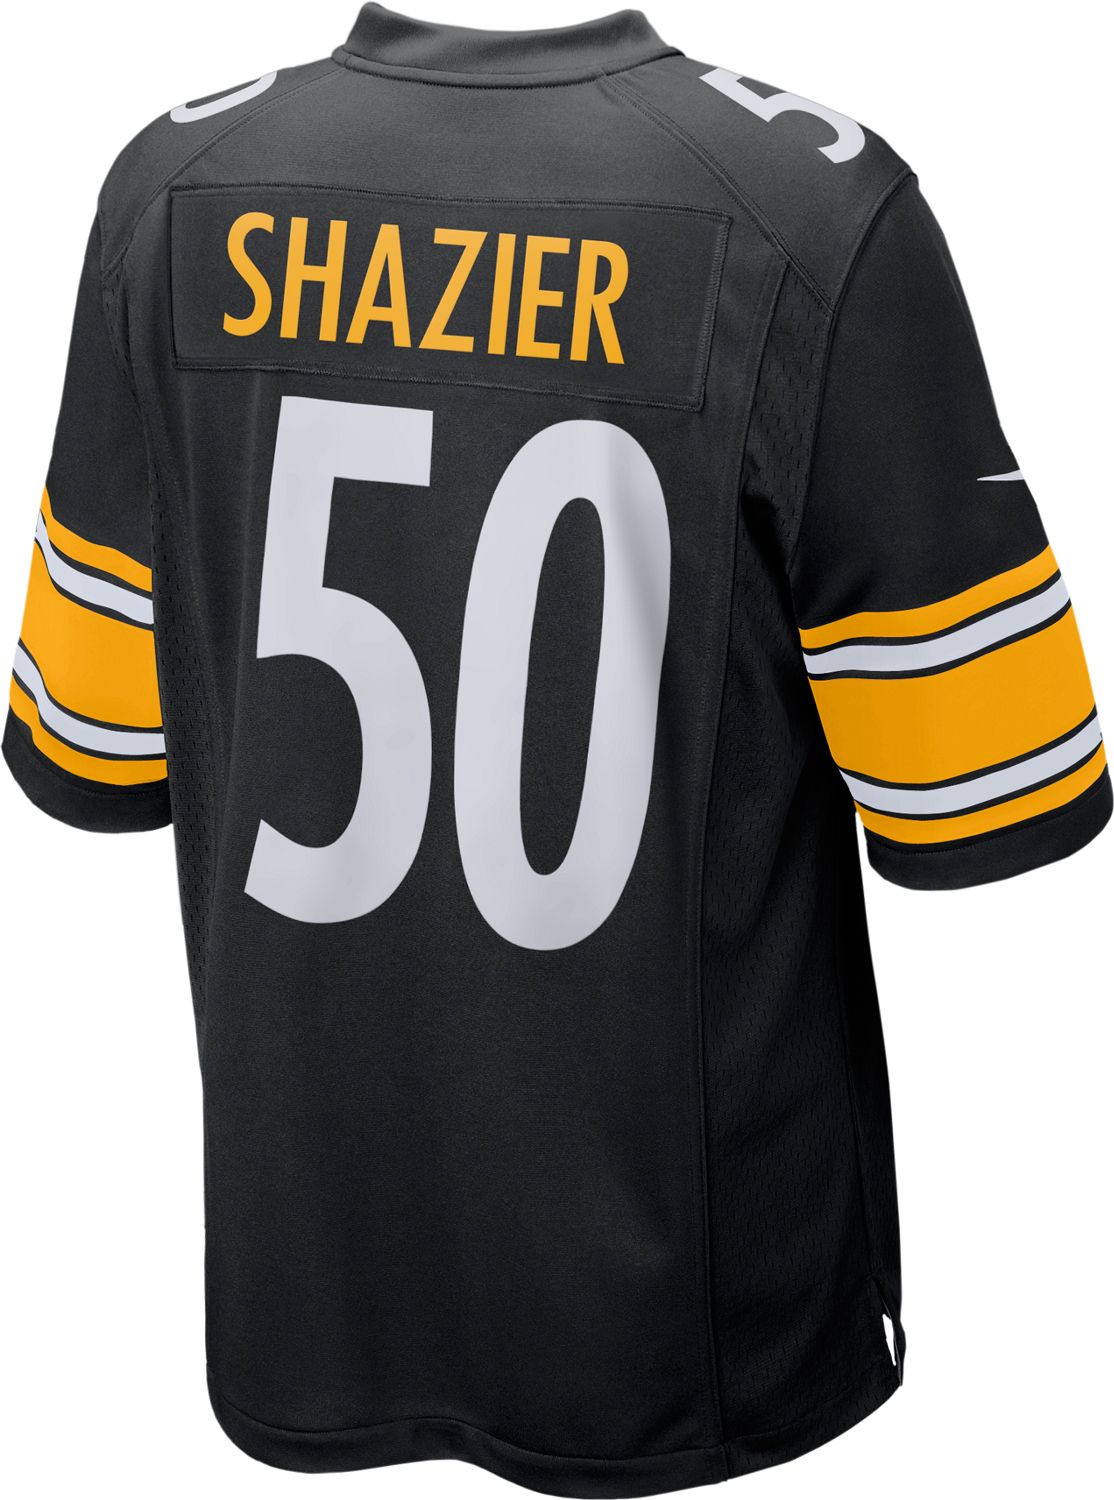 Pittsburgh Steelers Ryan Shazier #50 